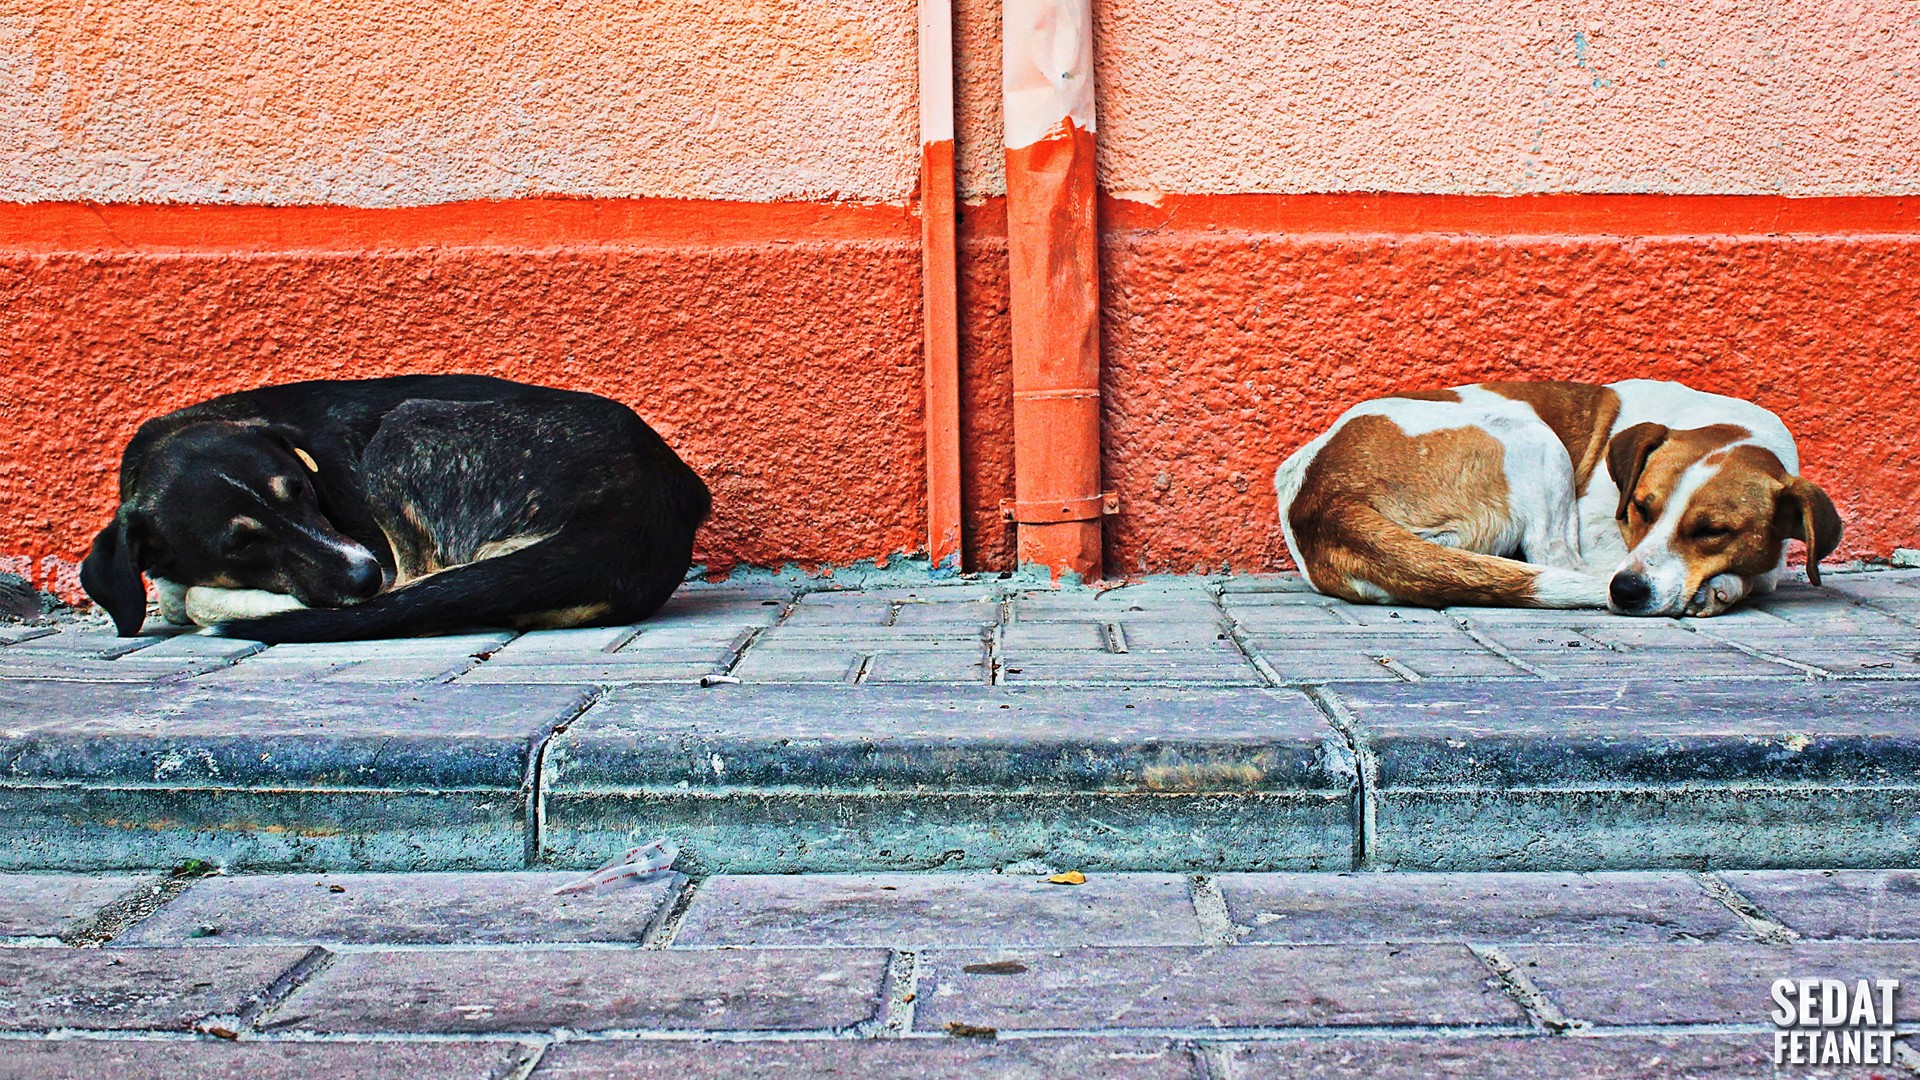 General 1920x1080 dog animals street wall sleeping mammals urban